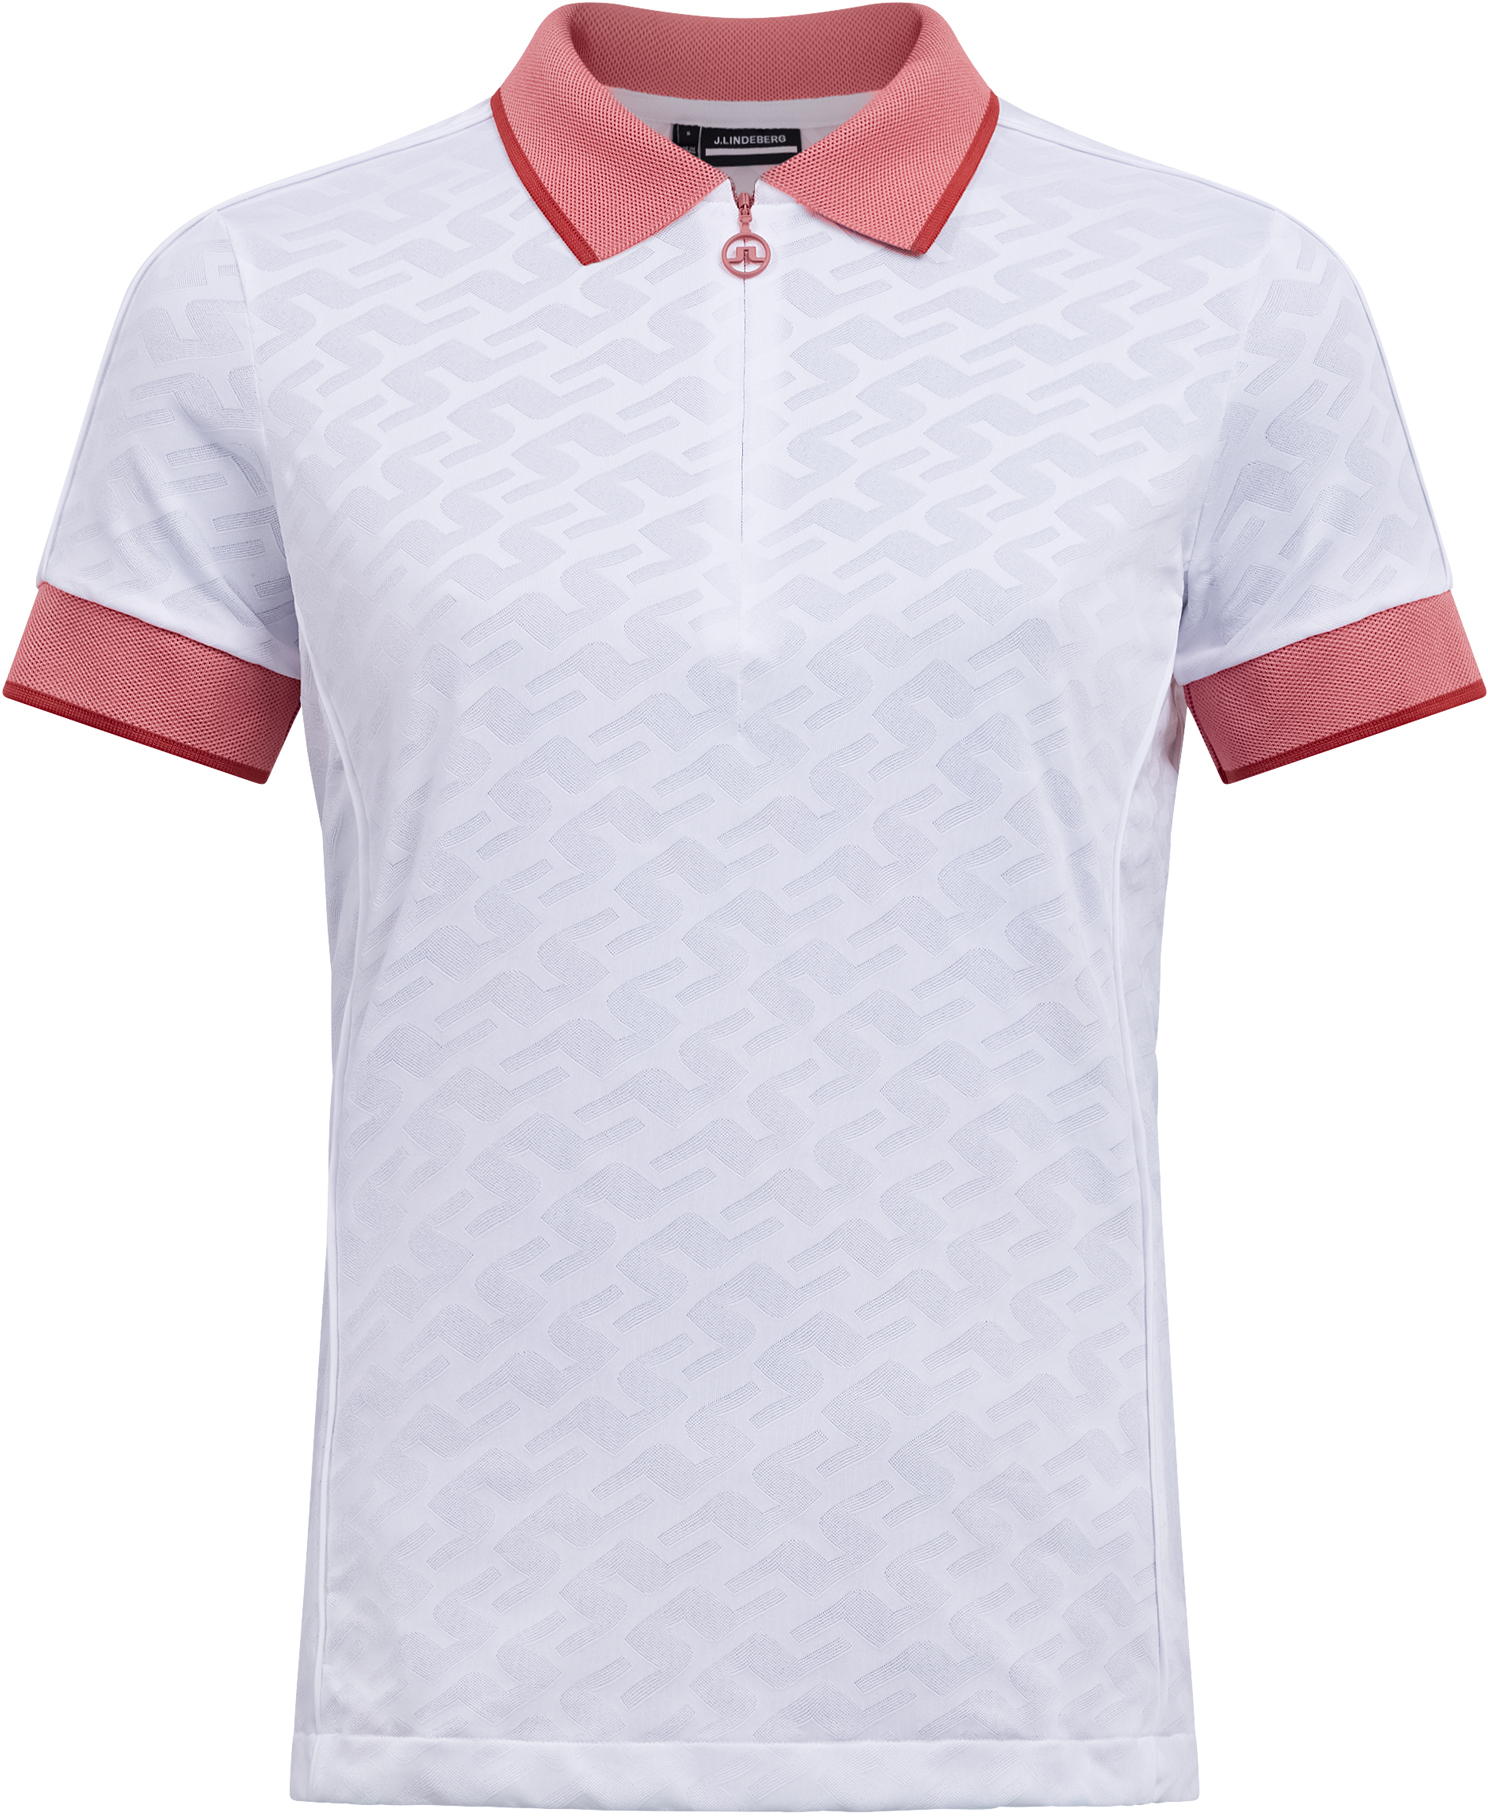 J.Lindeberg Galiah Golf Polo, white/rose